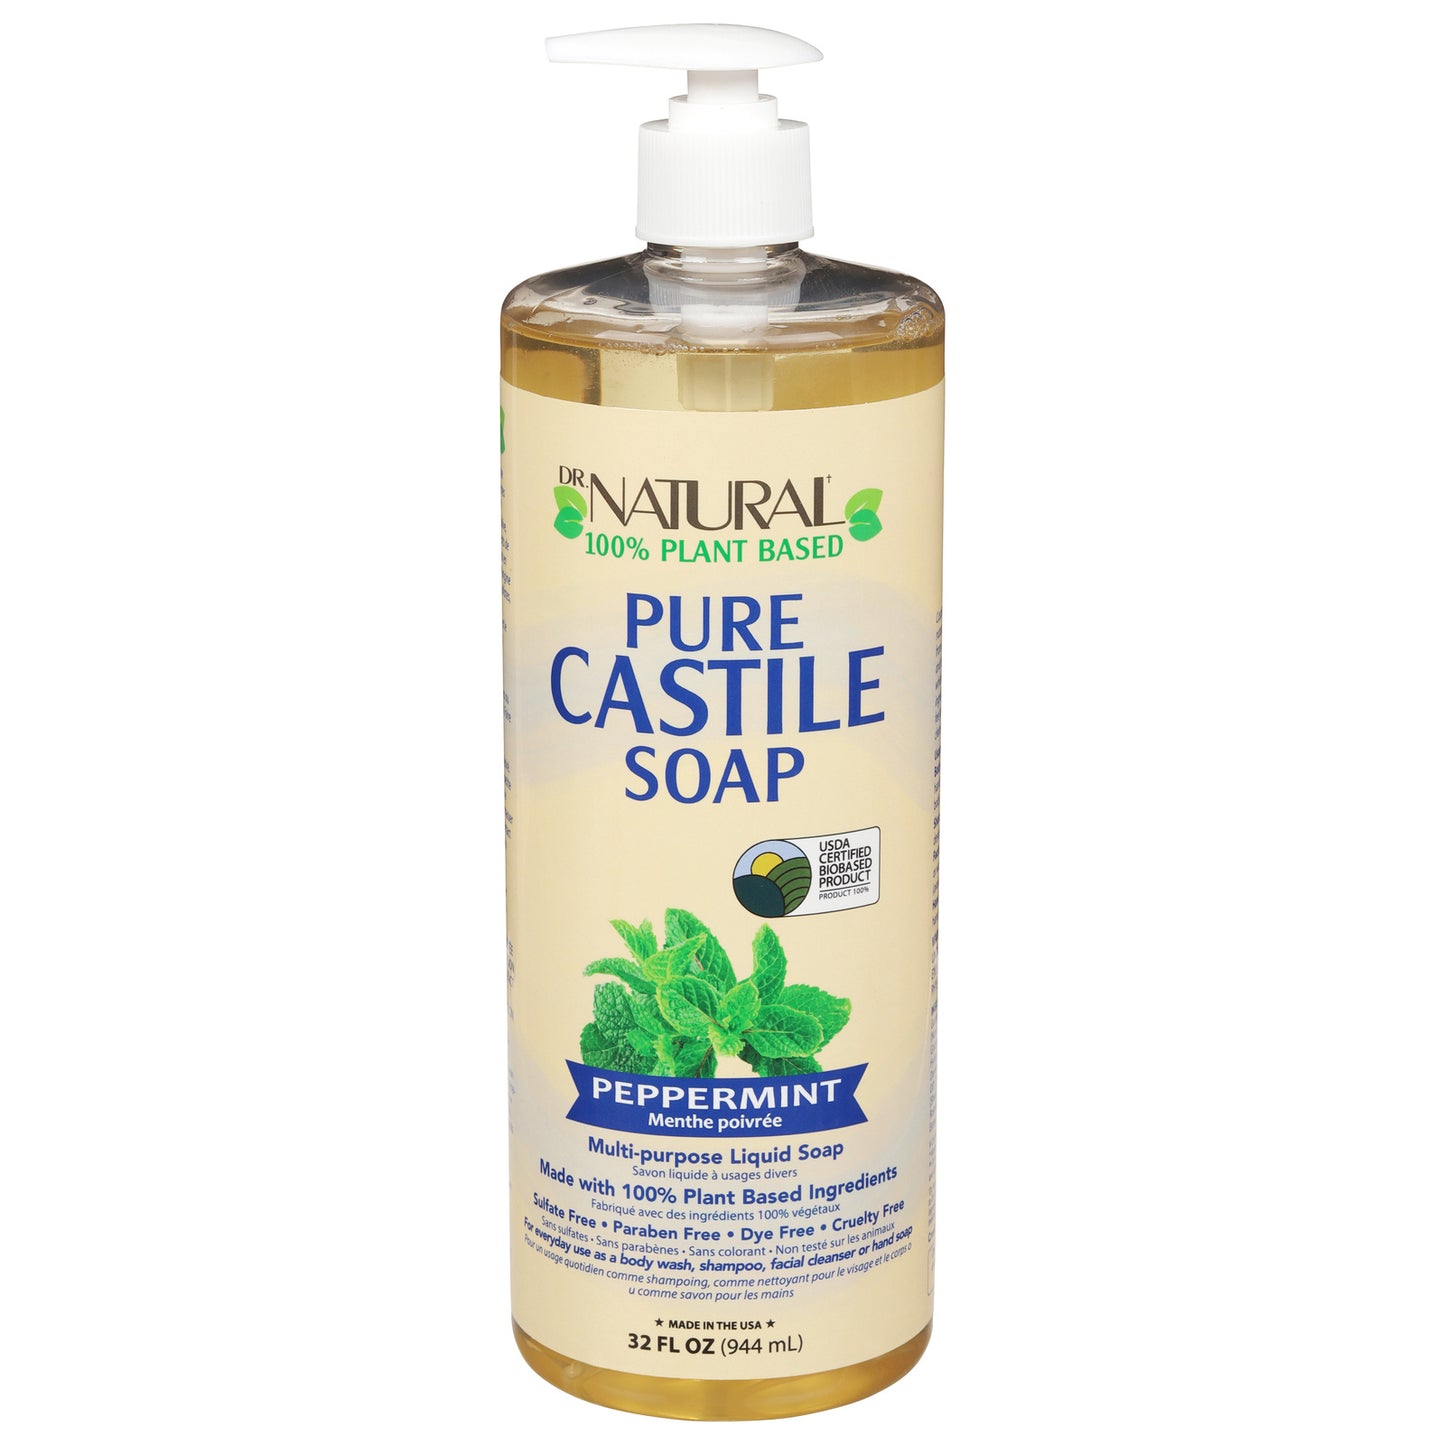 Dr. Natural - Castile Liquid Soap Peppermt - 1 Each 1-32 Fz